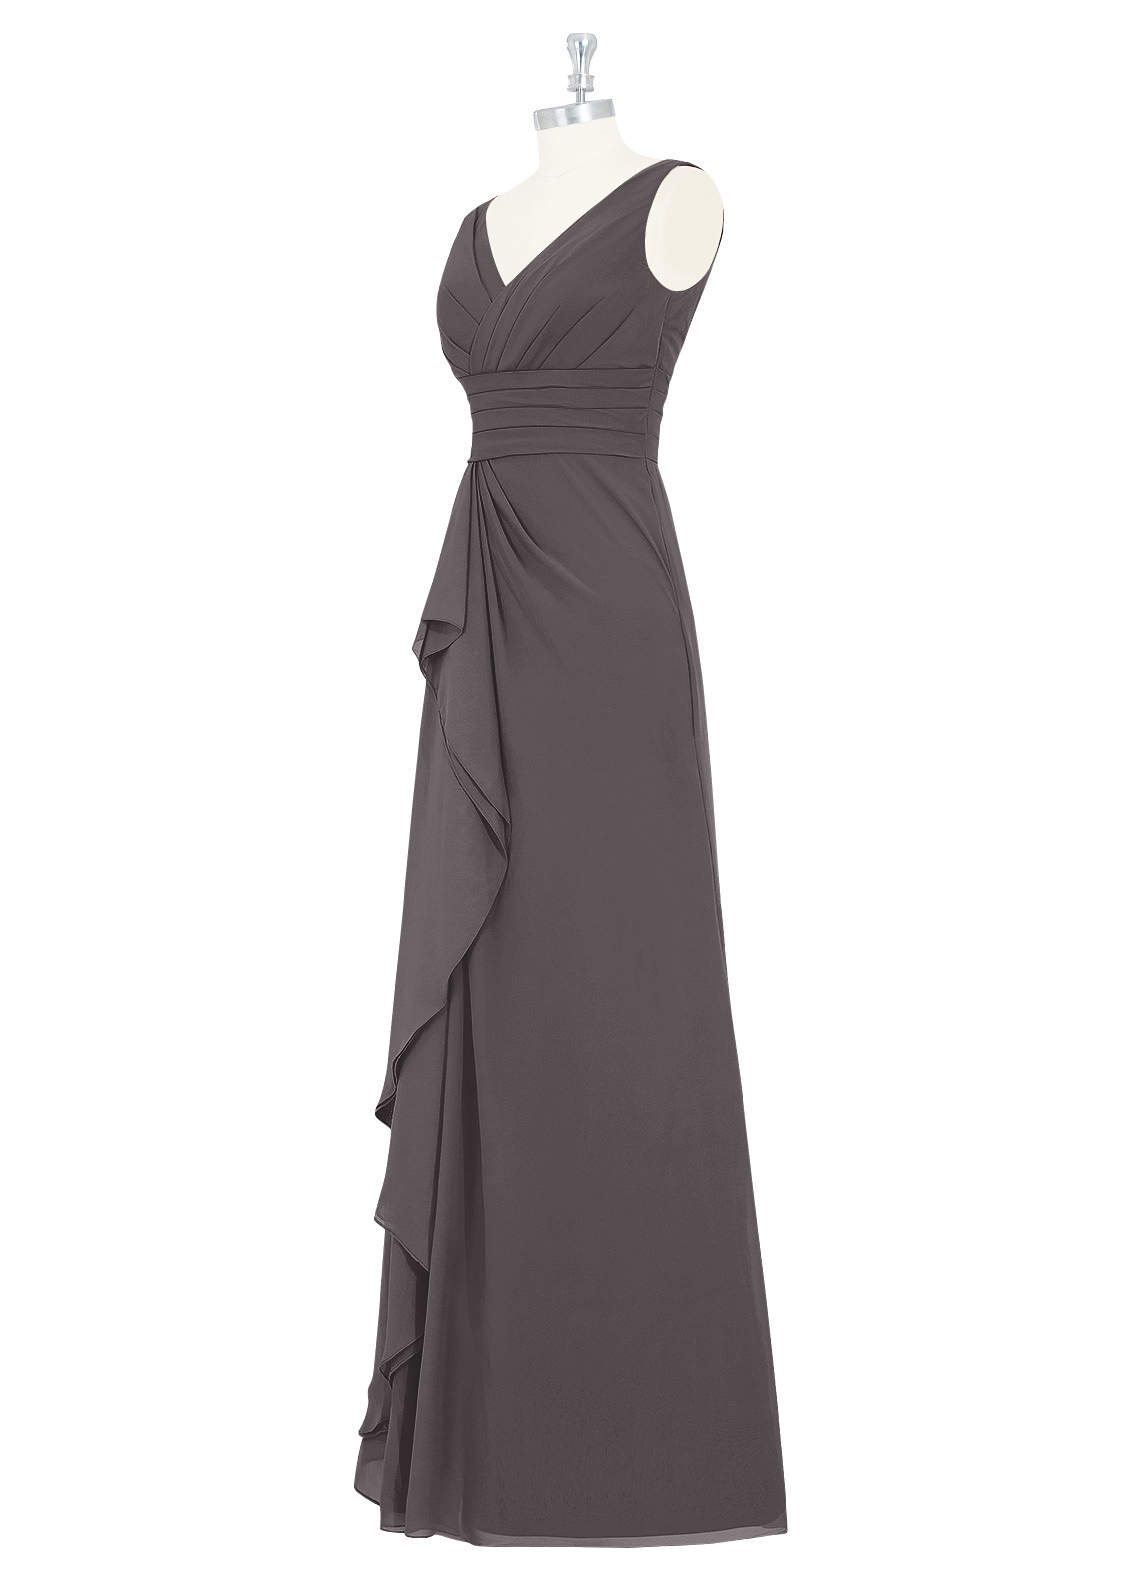 Azazie Julianna Bridesmaid Dresses A-Line Chiffon Floor-Length Dress image1